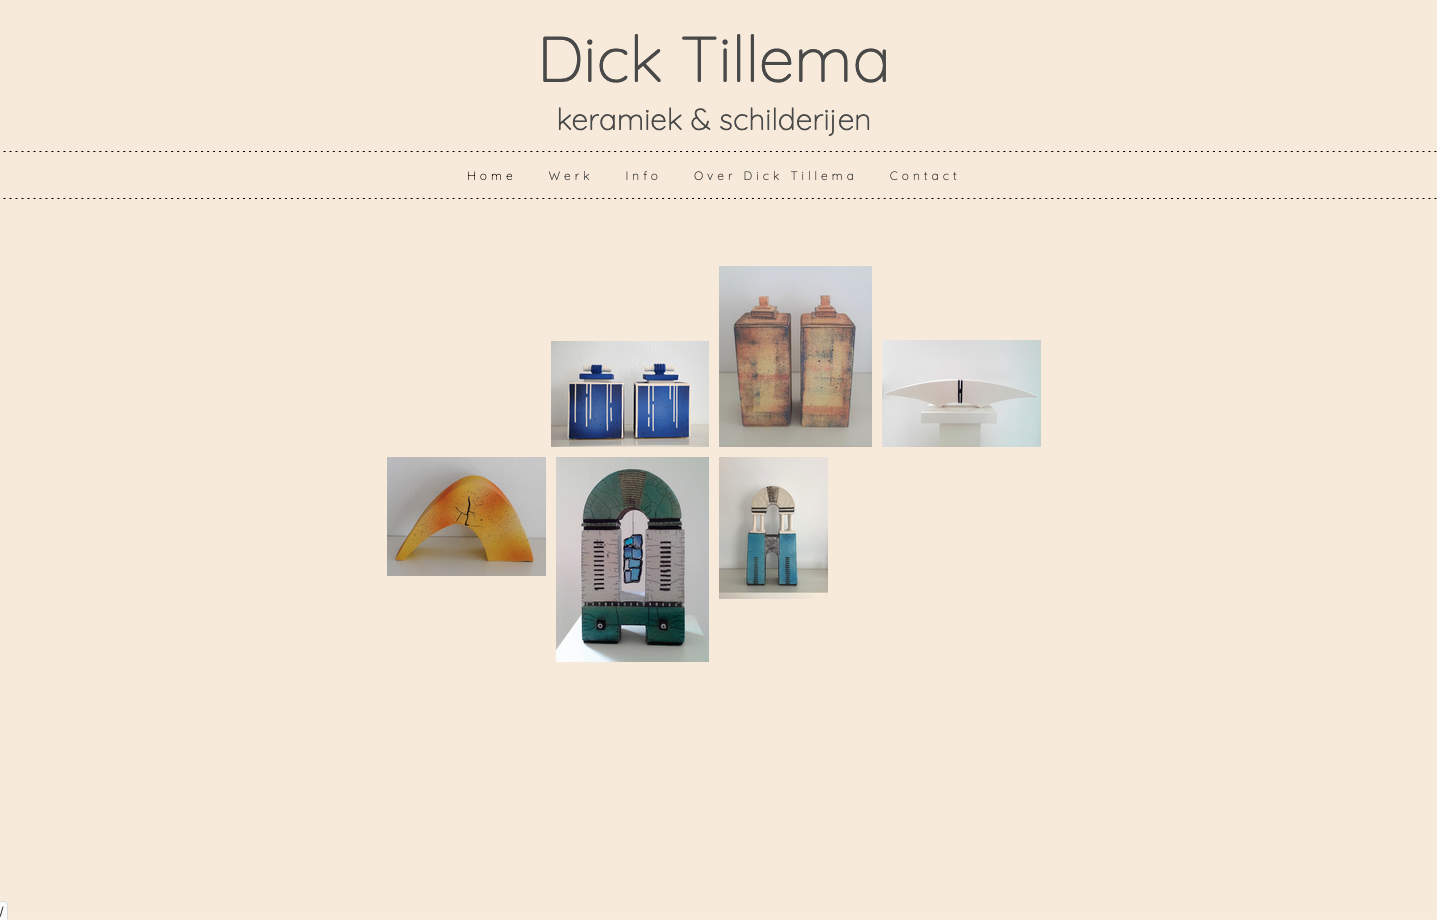 Kunstidee webdesign - Dick Tillema